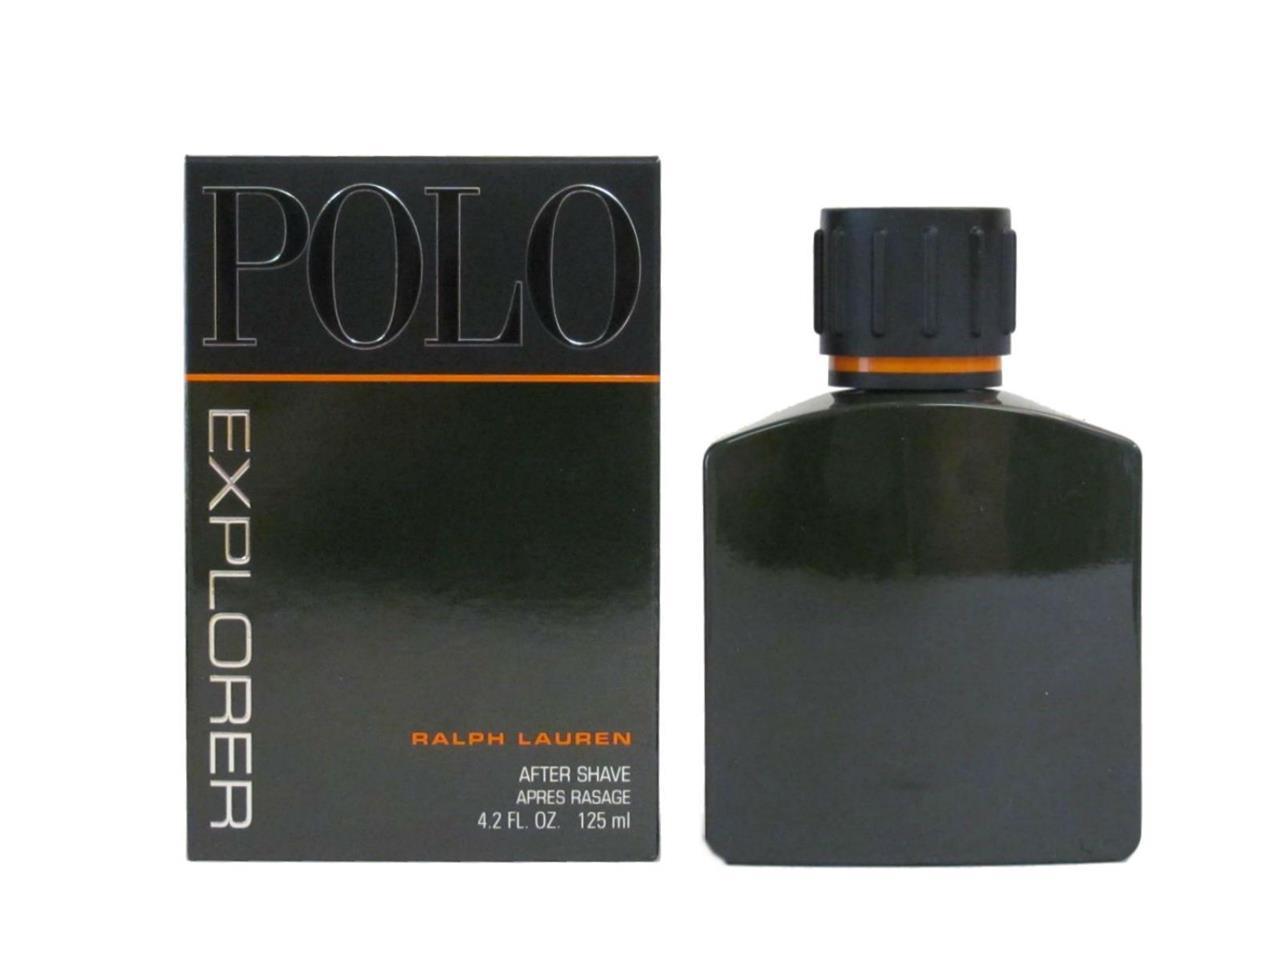 Polo Explorer After Shave 125 ml - Parfum Gallerie